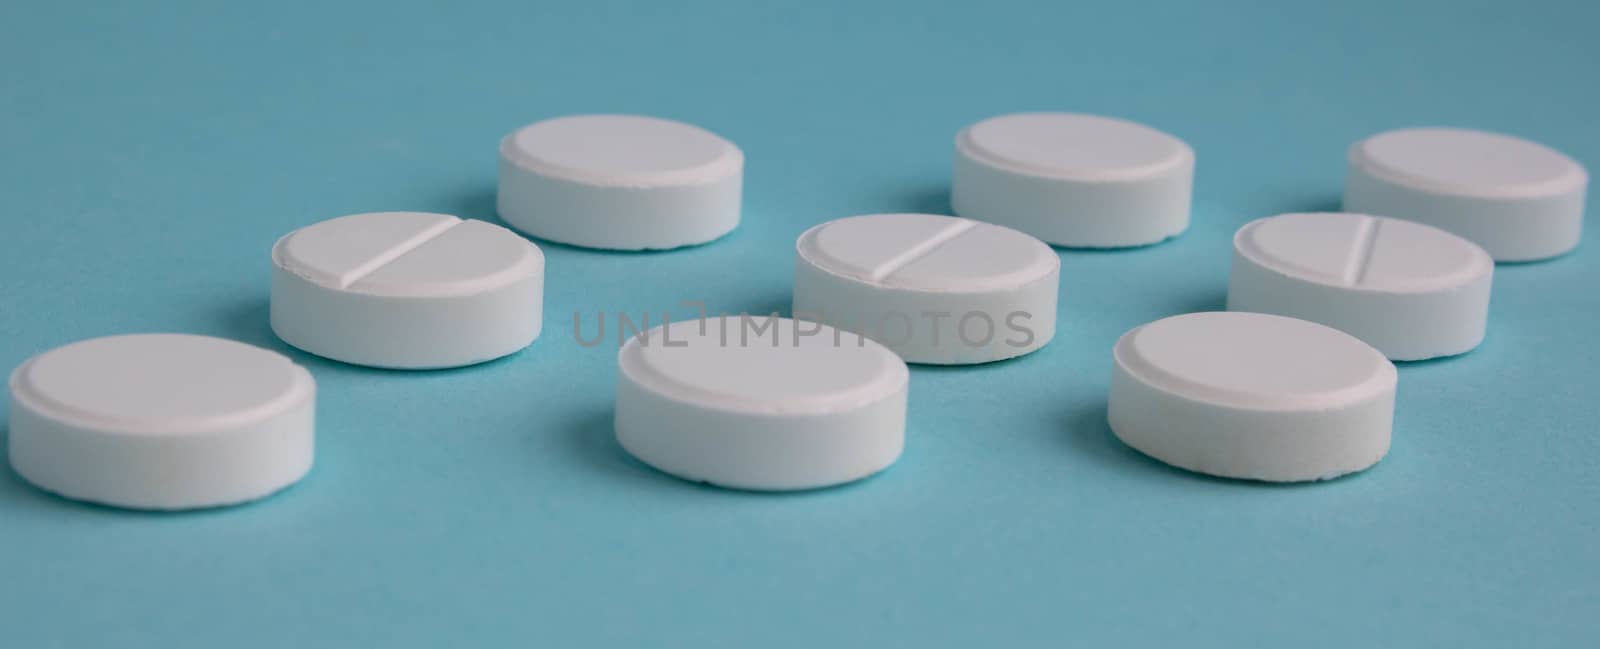 tablets from pharmaceuticals antibiotics medicine tablets antibacterial tablets